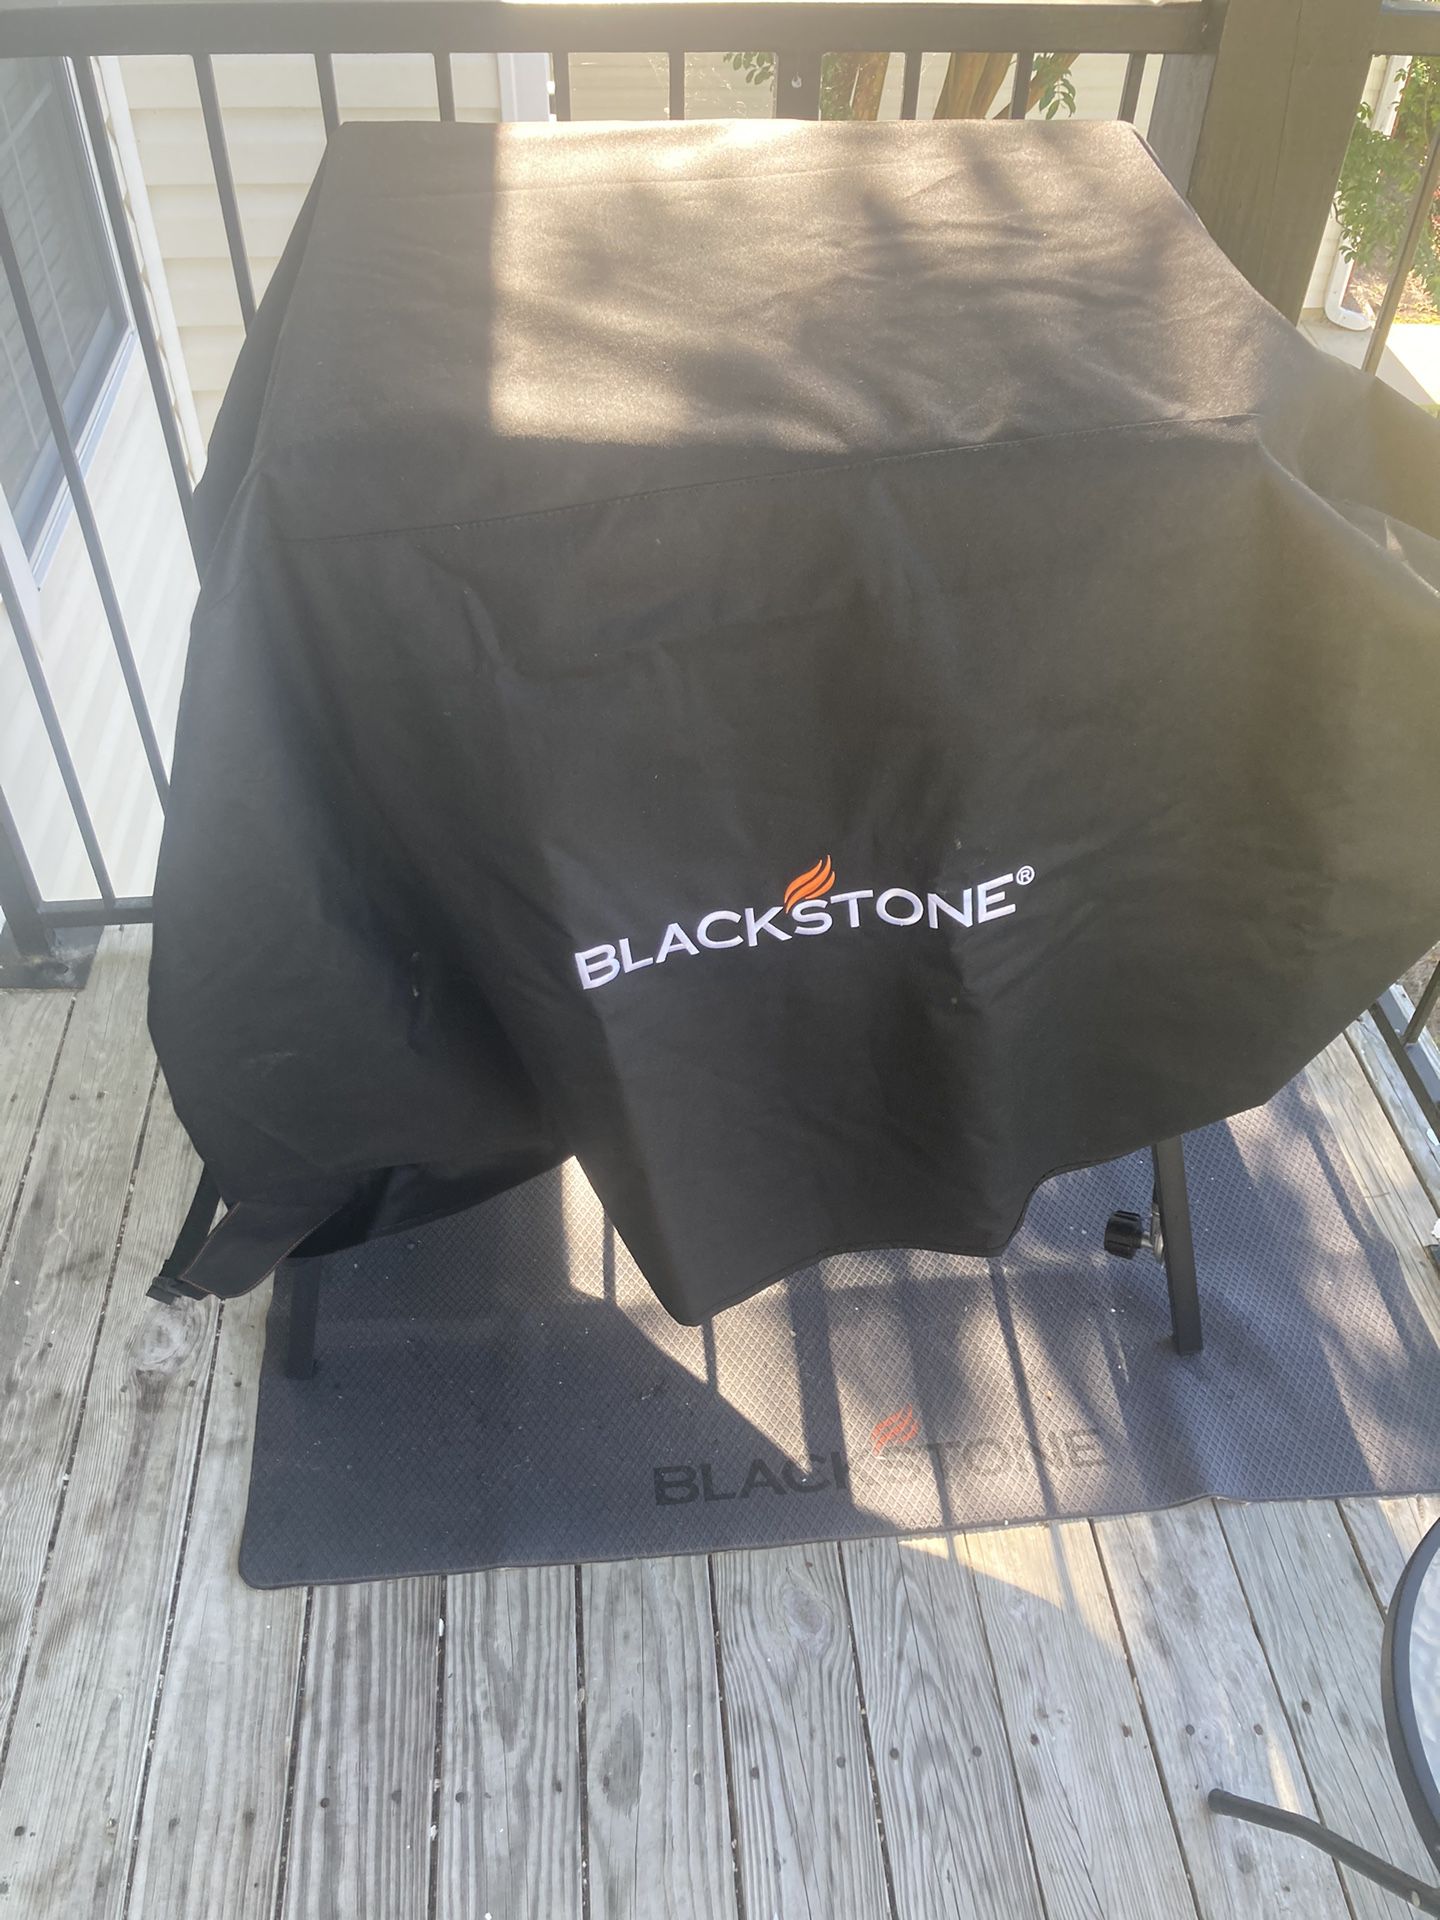 BlackStone Griddle